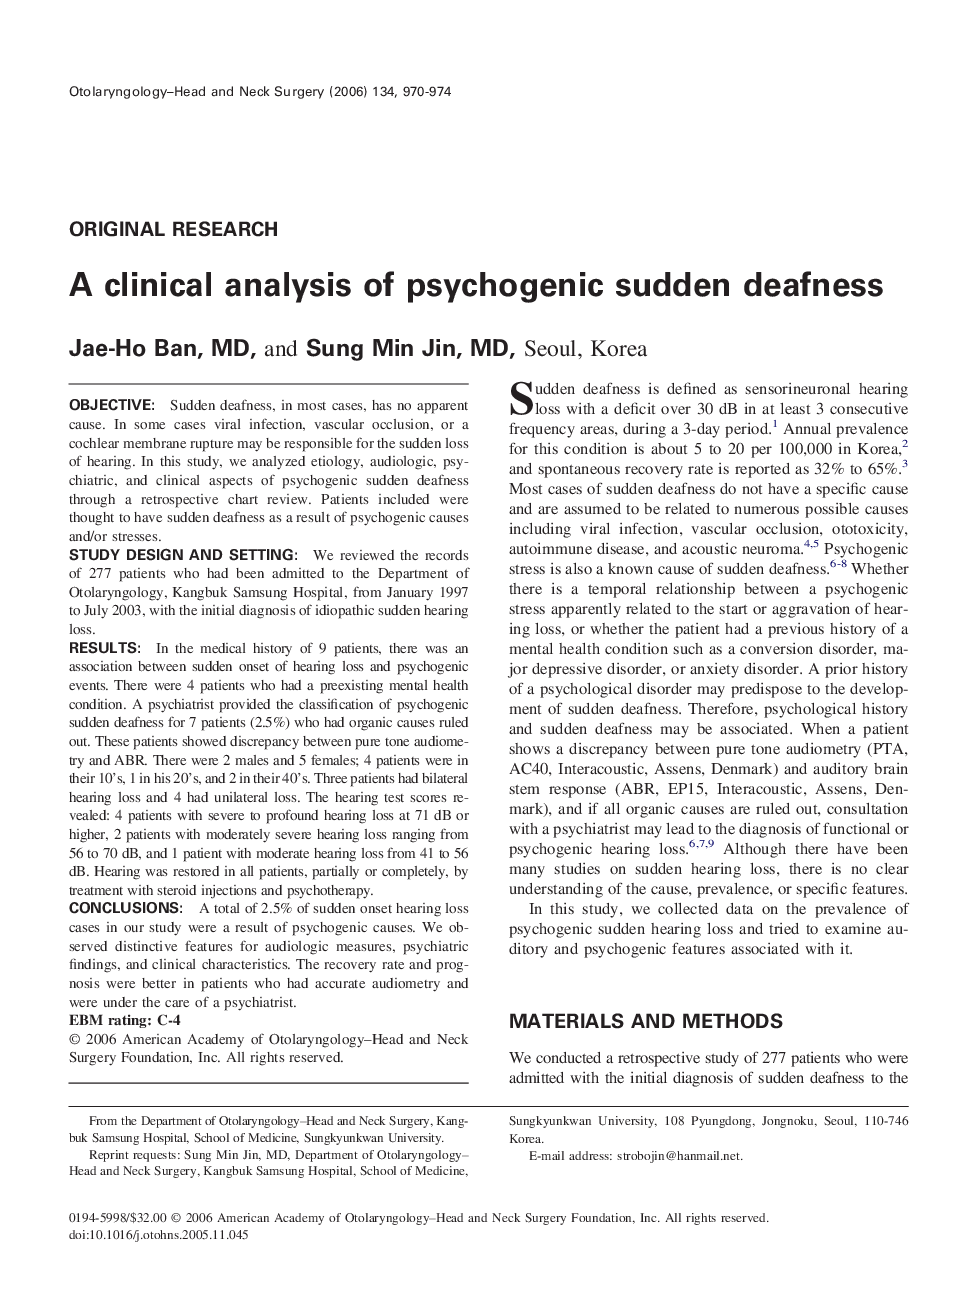 A clinical analysis of psychogenic sudden deafness